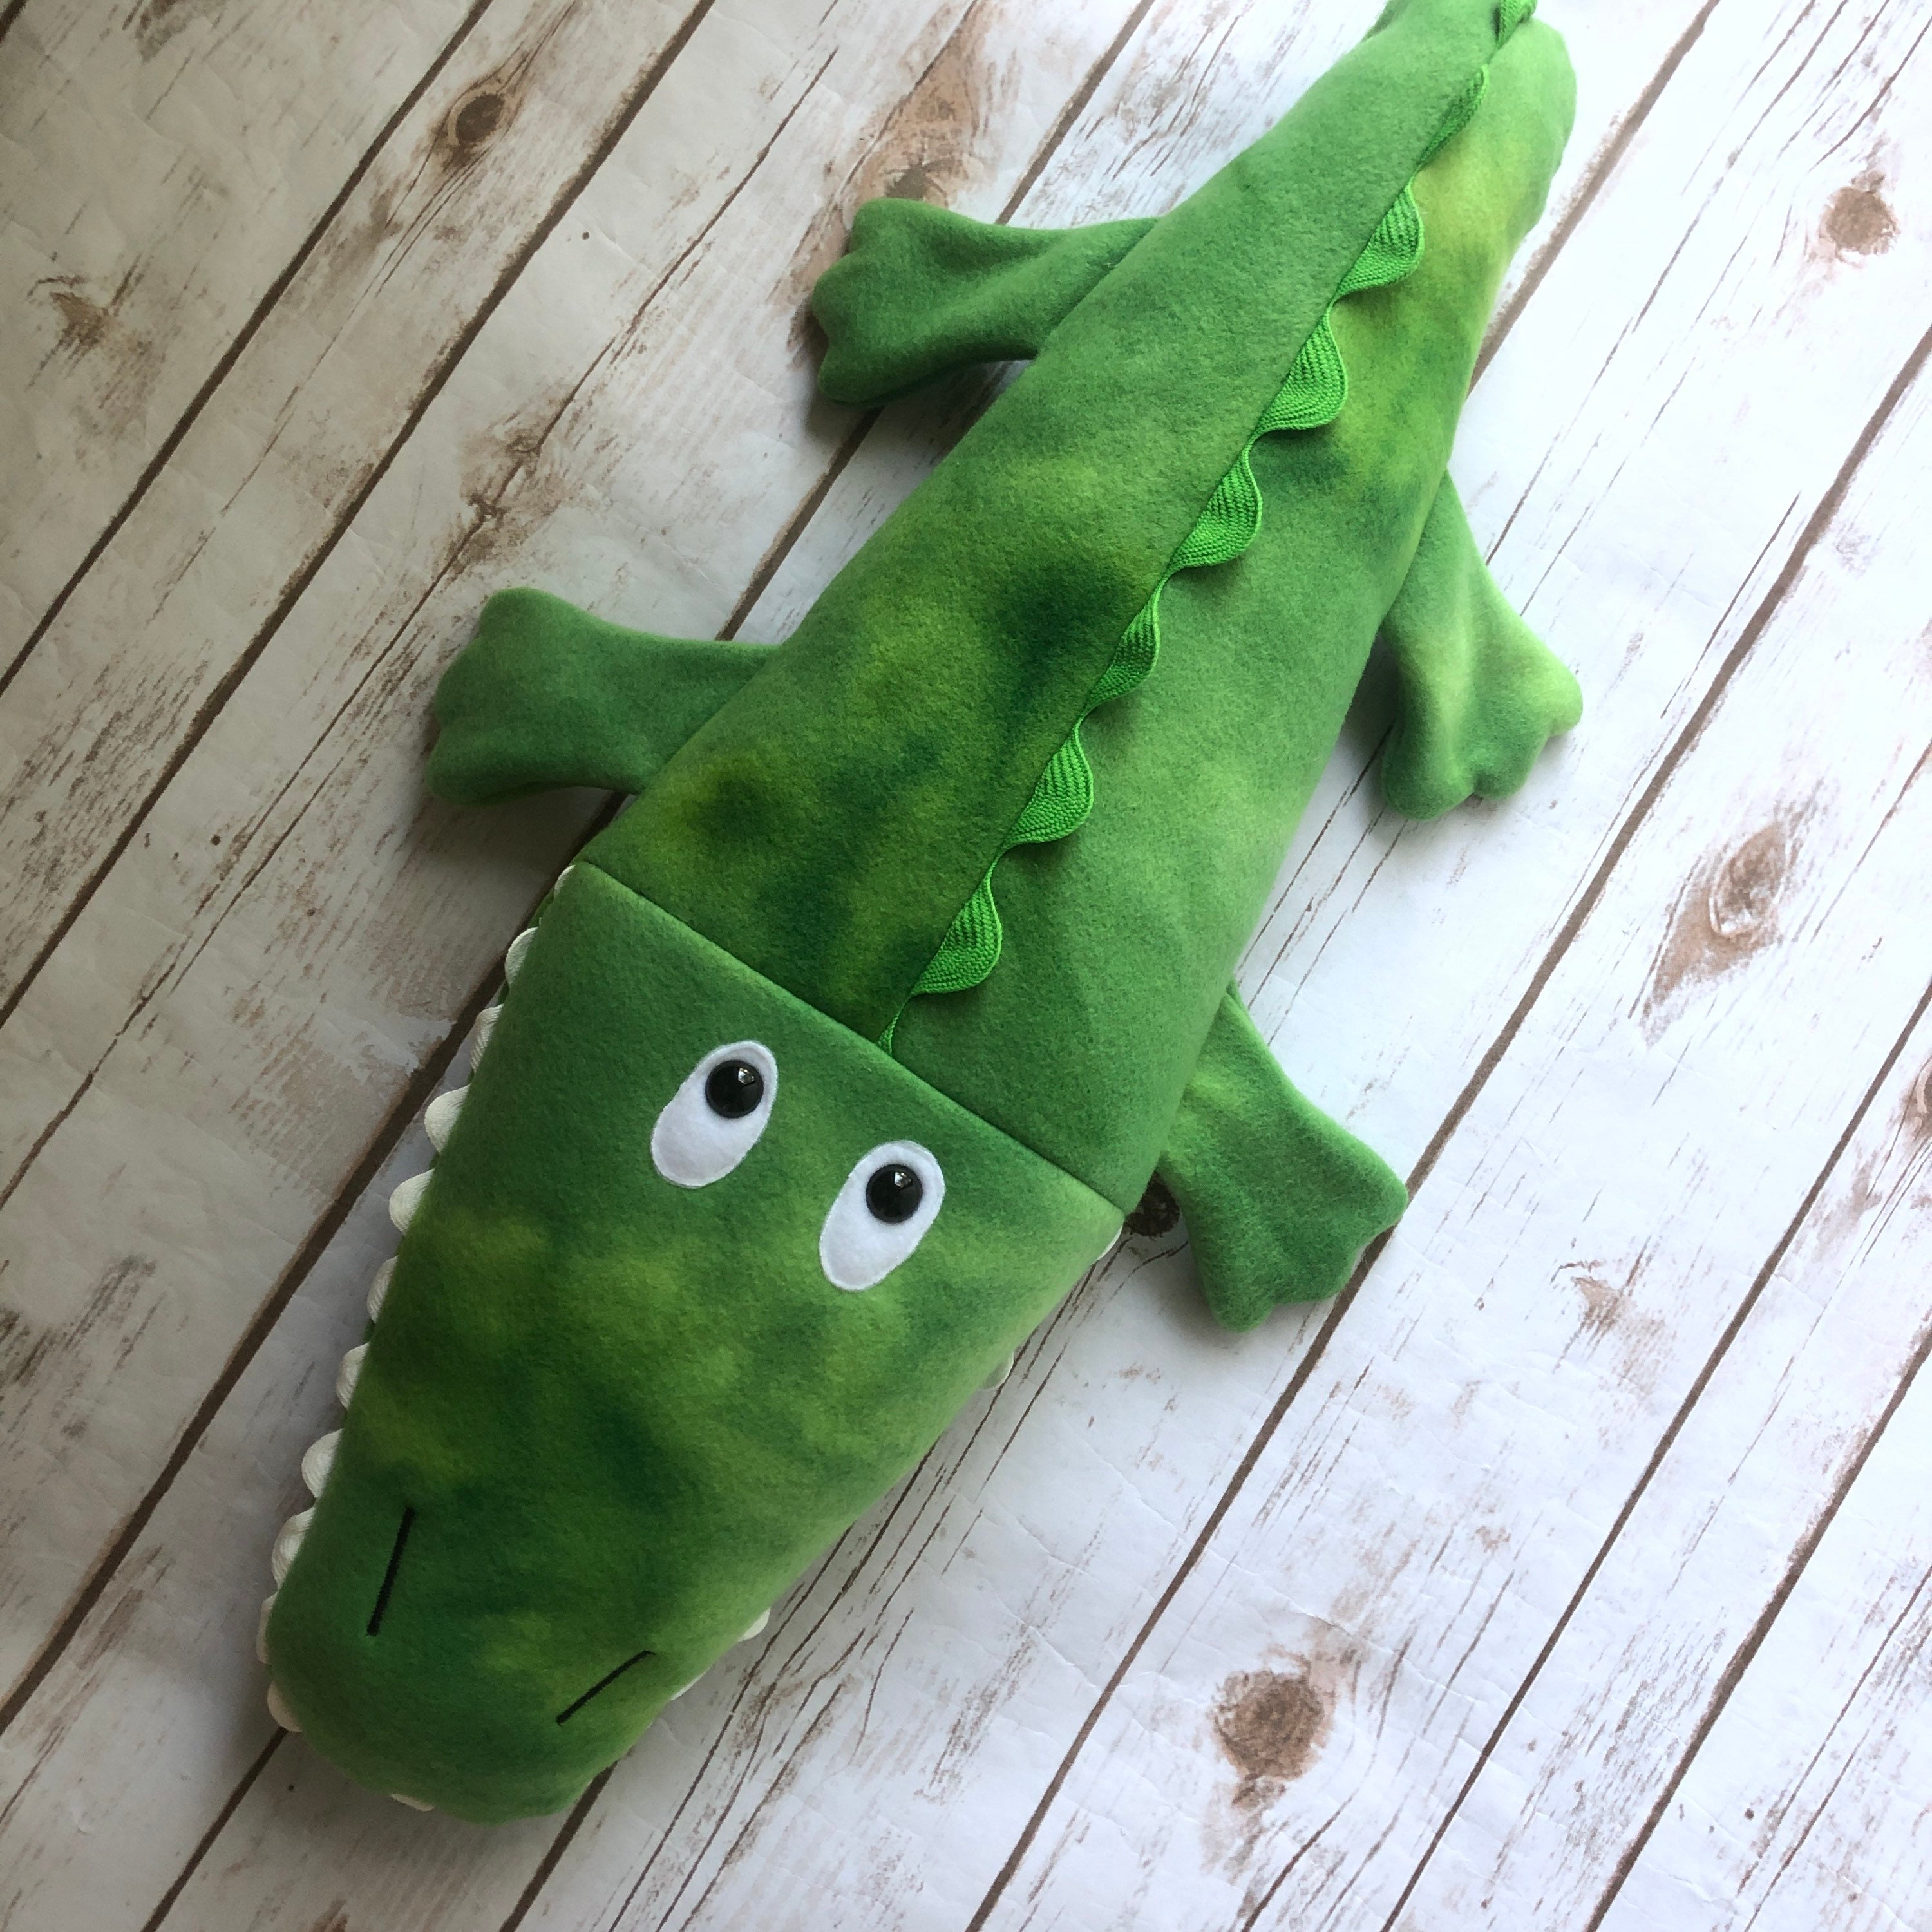 Large Stuffed Animal Alligator Pillow Alligator Plushie 